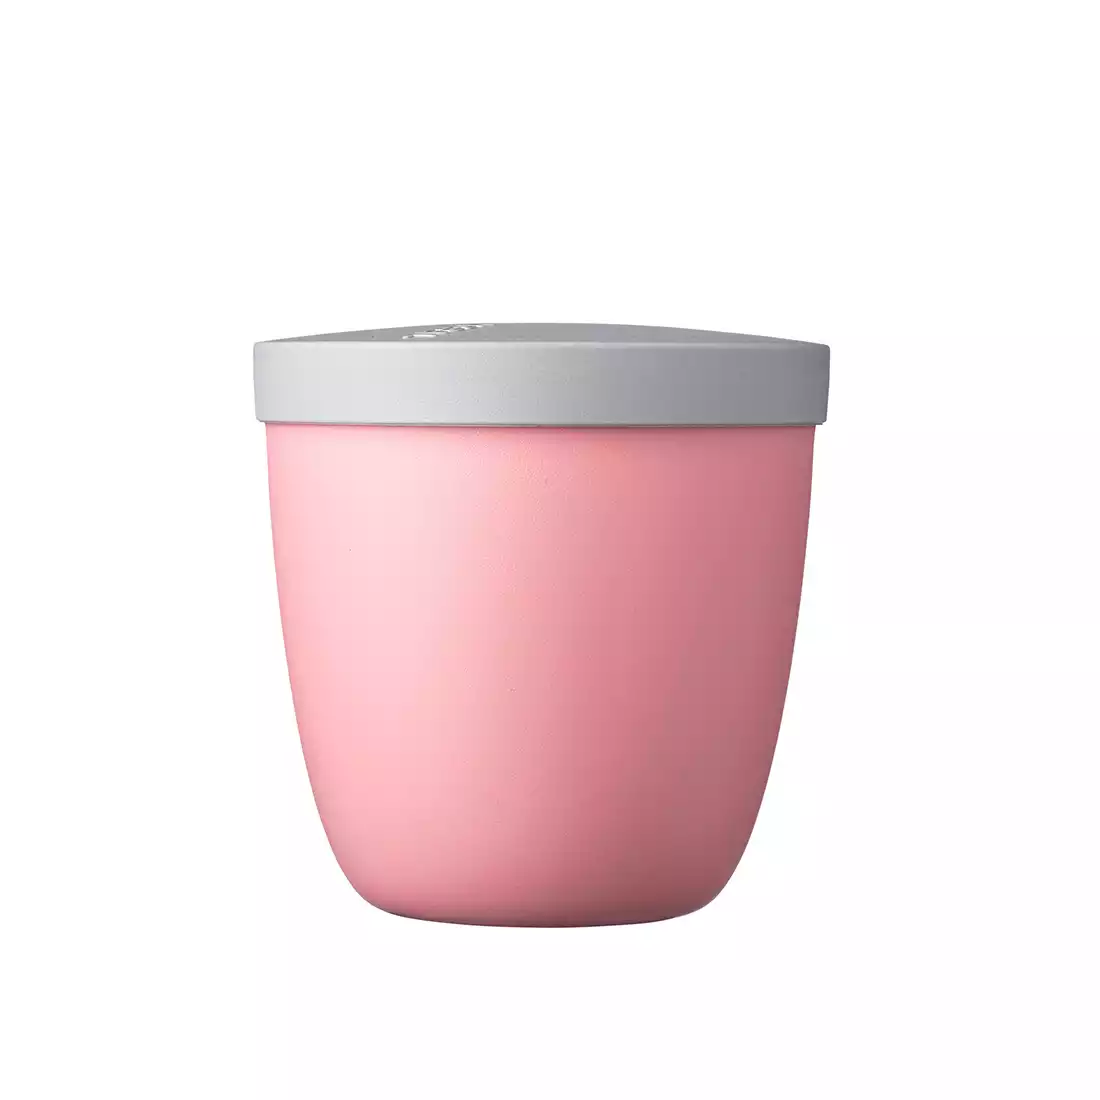 Mepal Ellipse snack pot - 500ml Nordic Pink, różowy